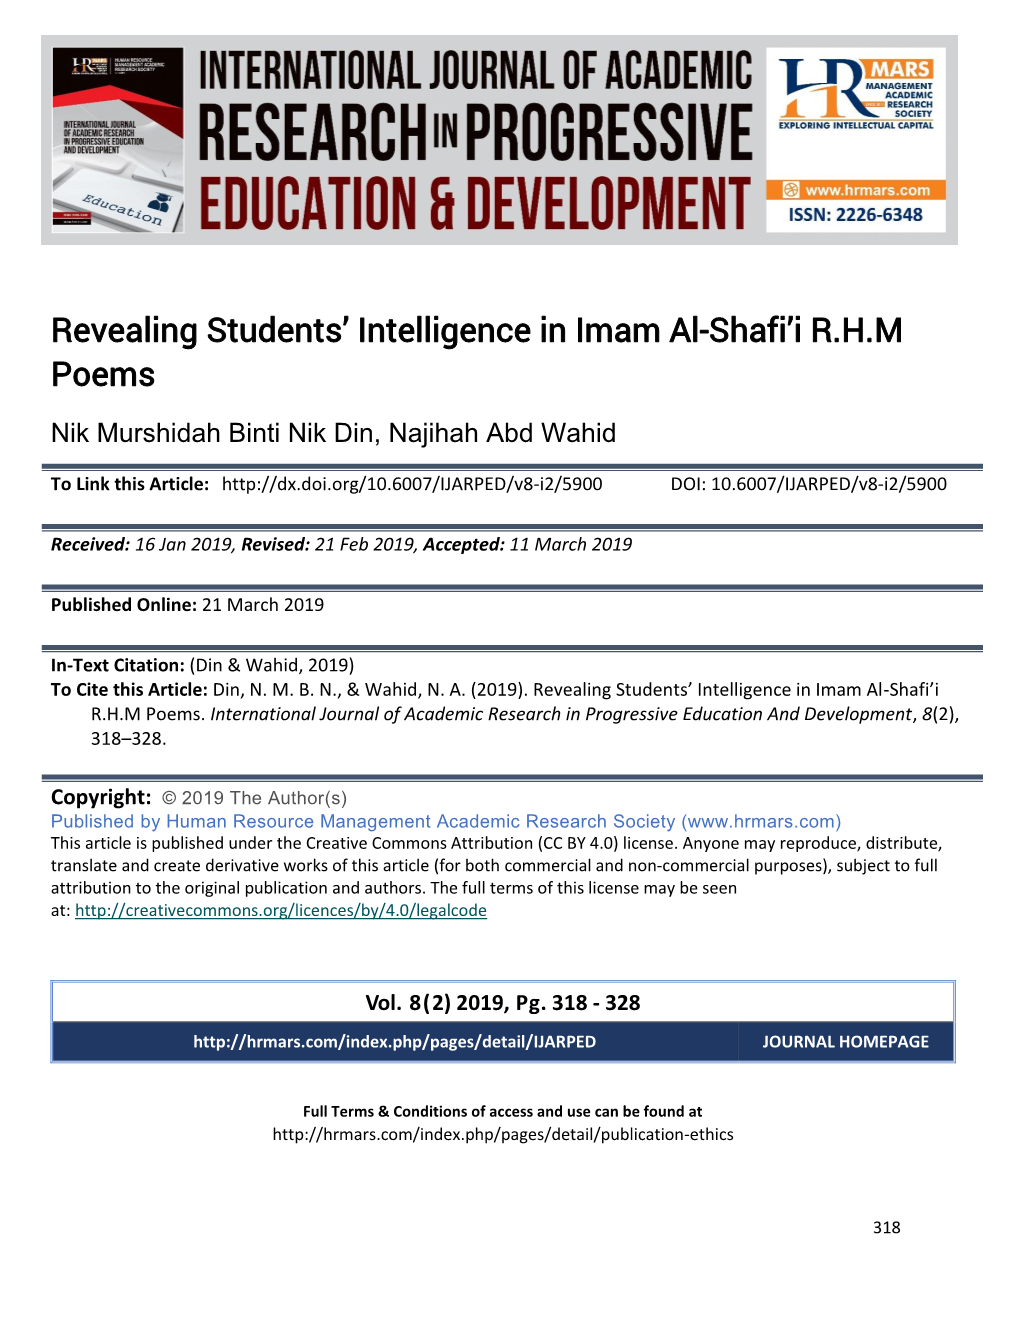 Revealing Students' Intelligence in Imam Al-Shafi'i R.H.M Poems